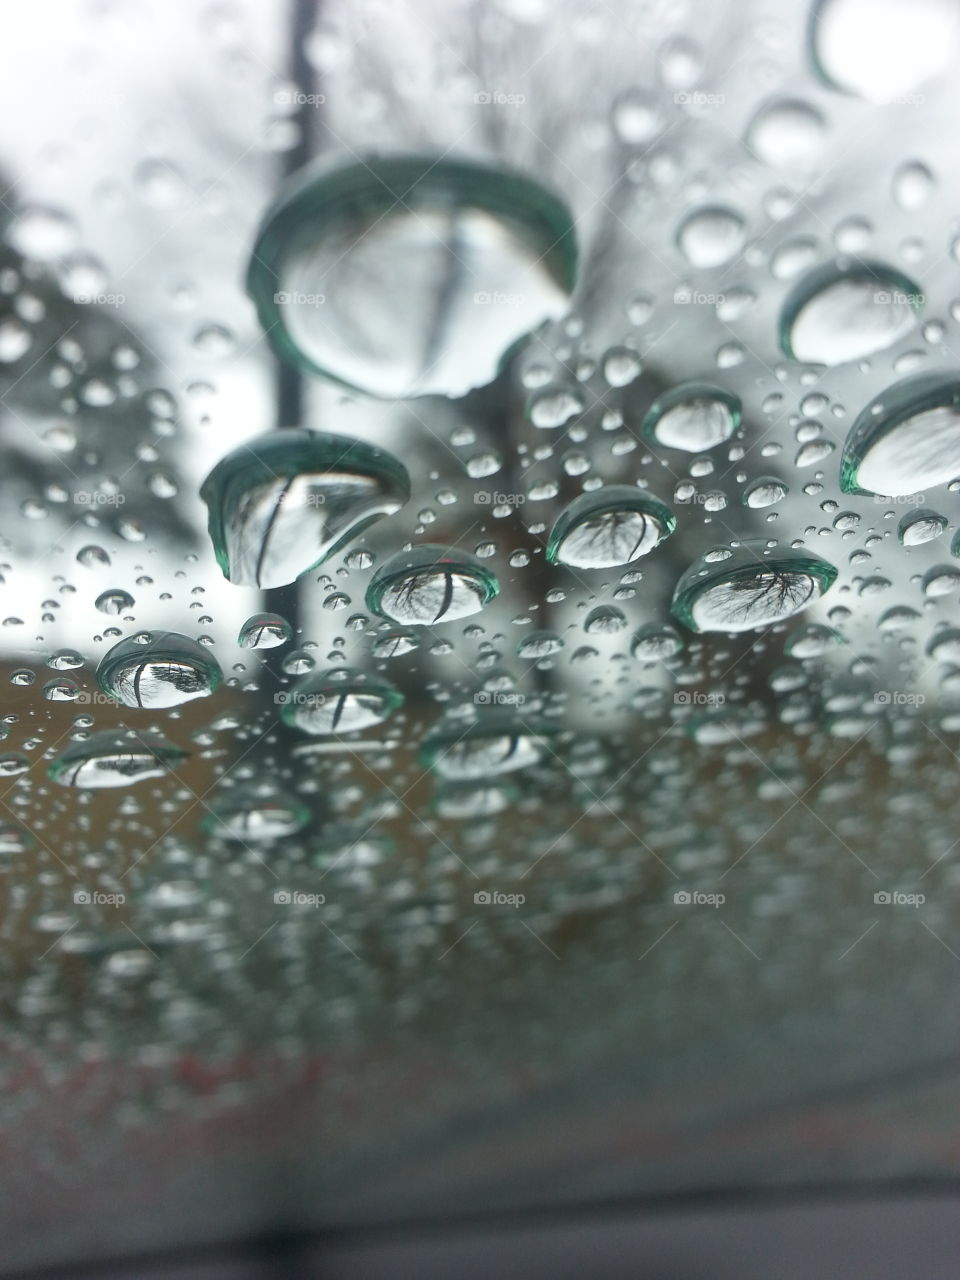 Drop, Wet, Rain, Bubble, Droplet